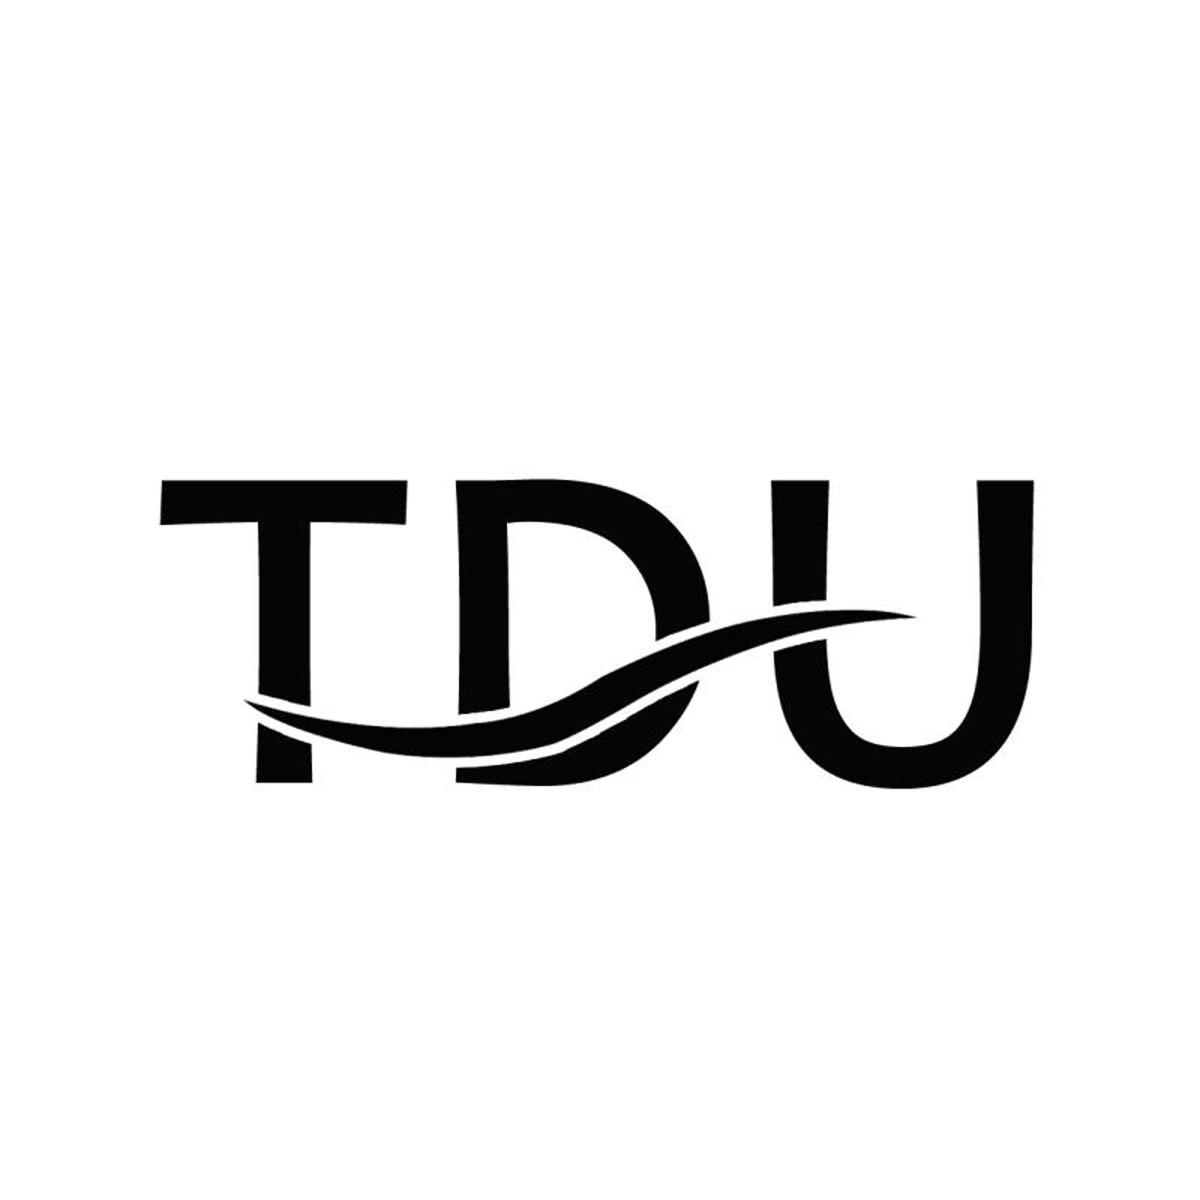 TDU猫砂商标转让费用买卖交易流程